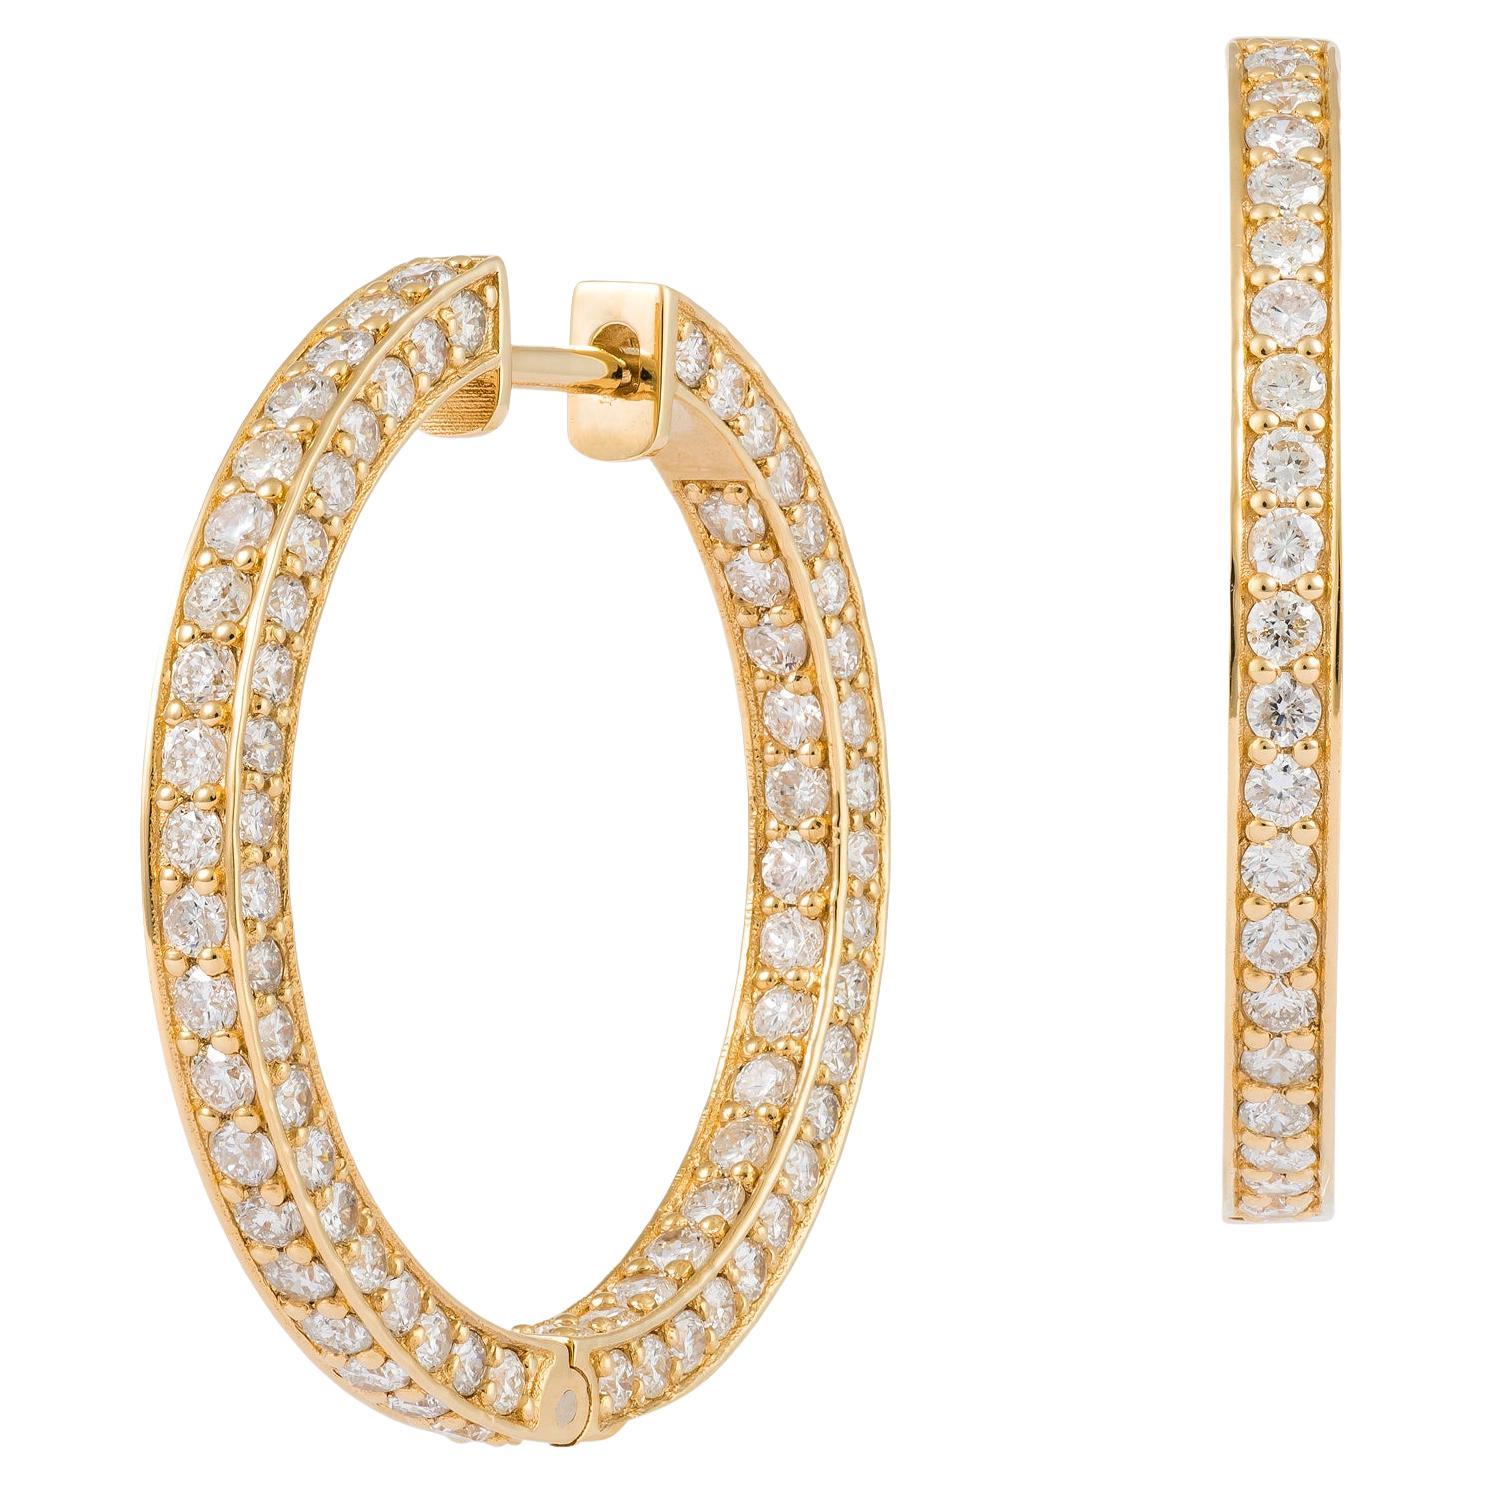 NWT 18, 000 Boucles d'oreilles en or jaune 18KT Fancy Gorgeous Glittering Diamond Hoop Earrings